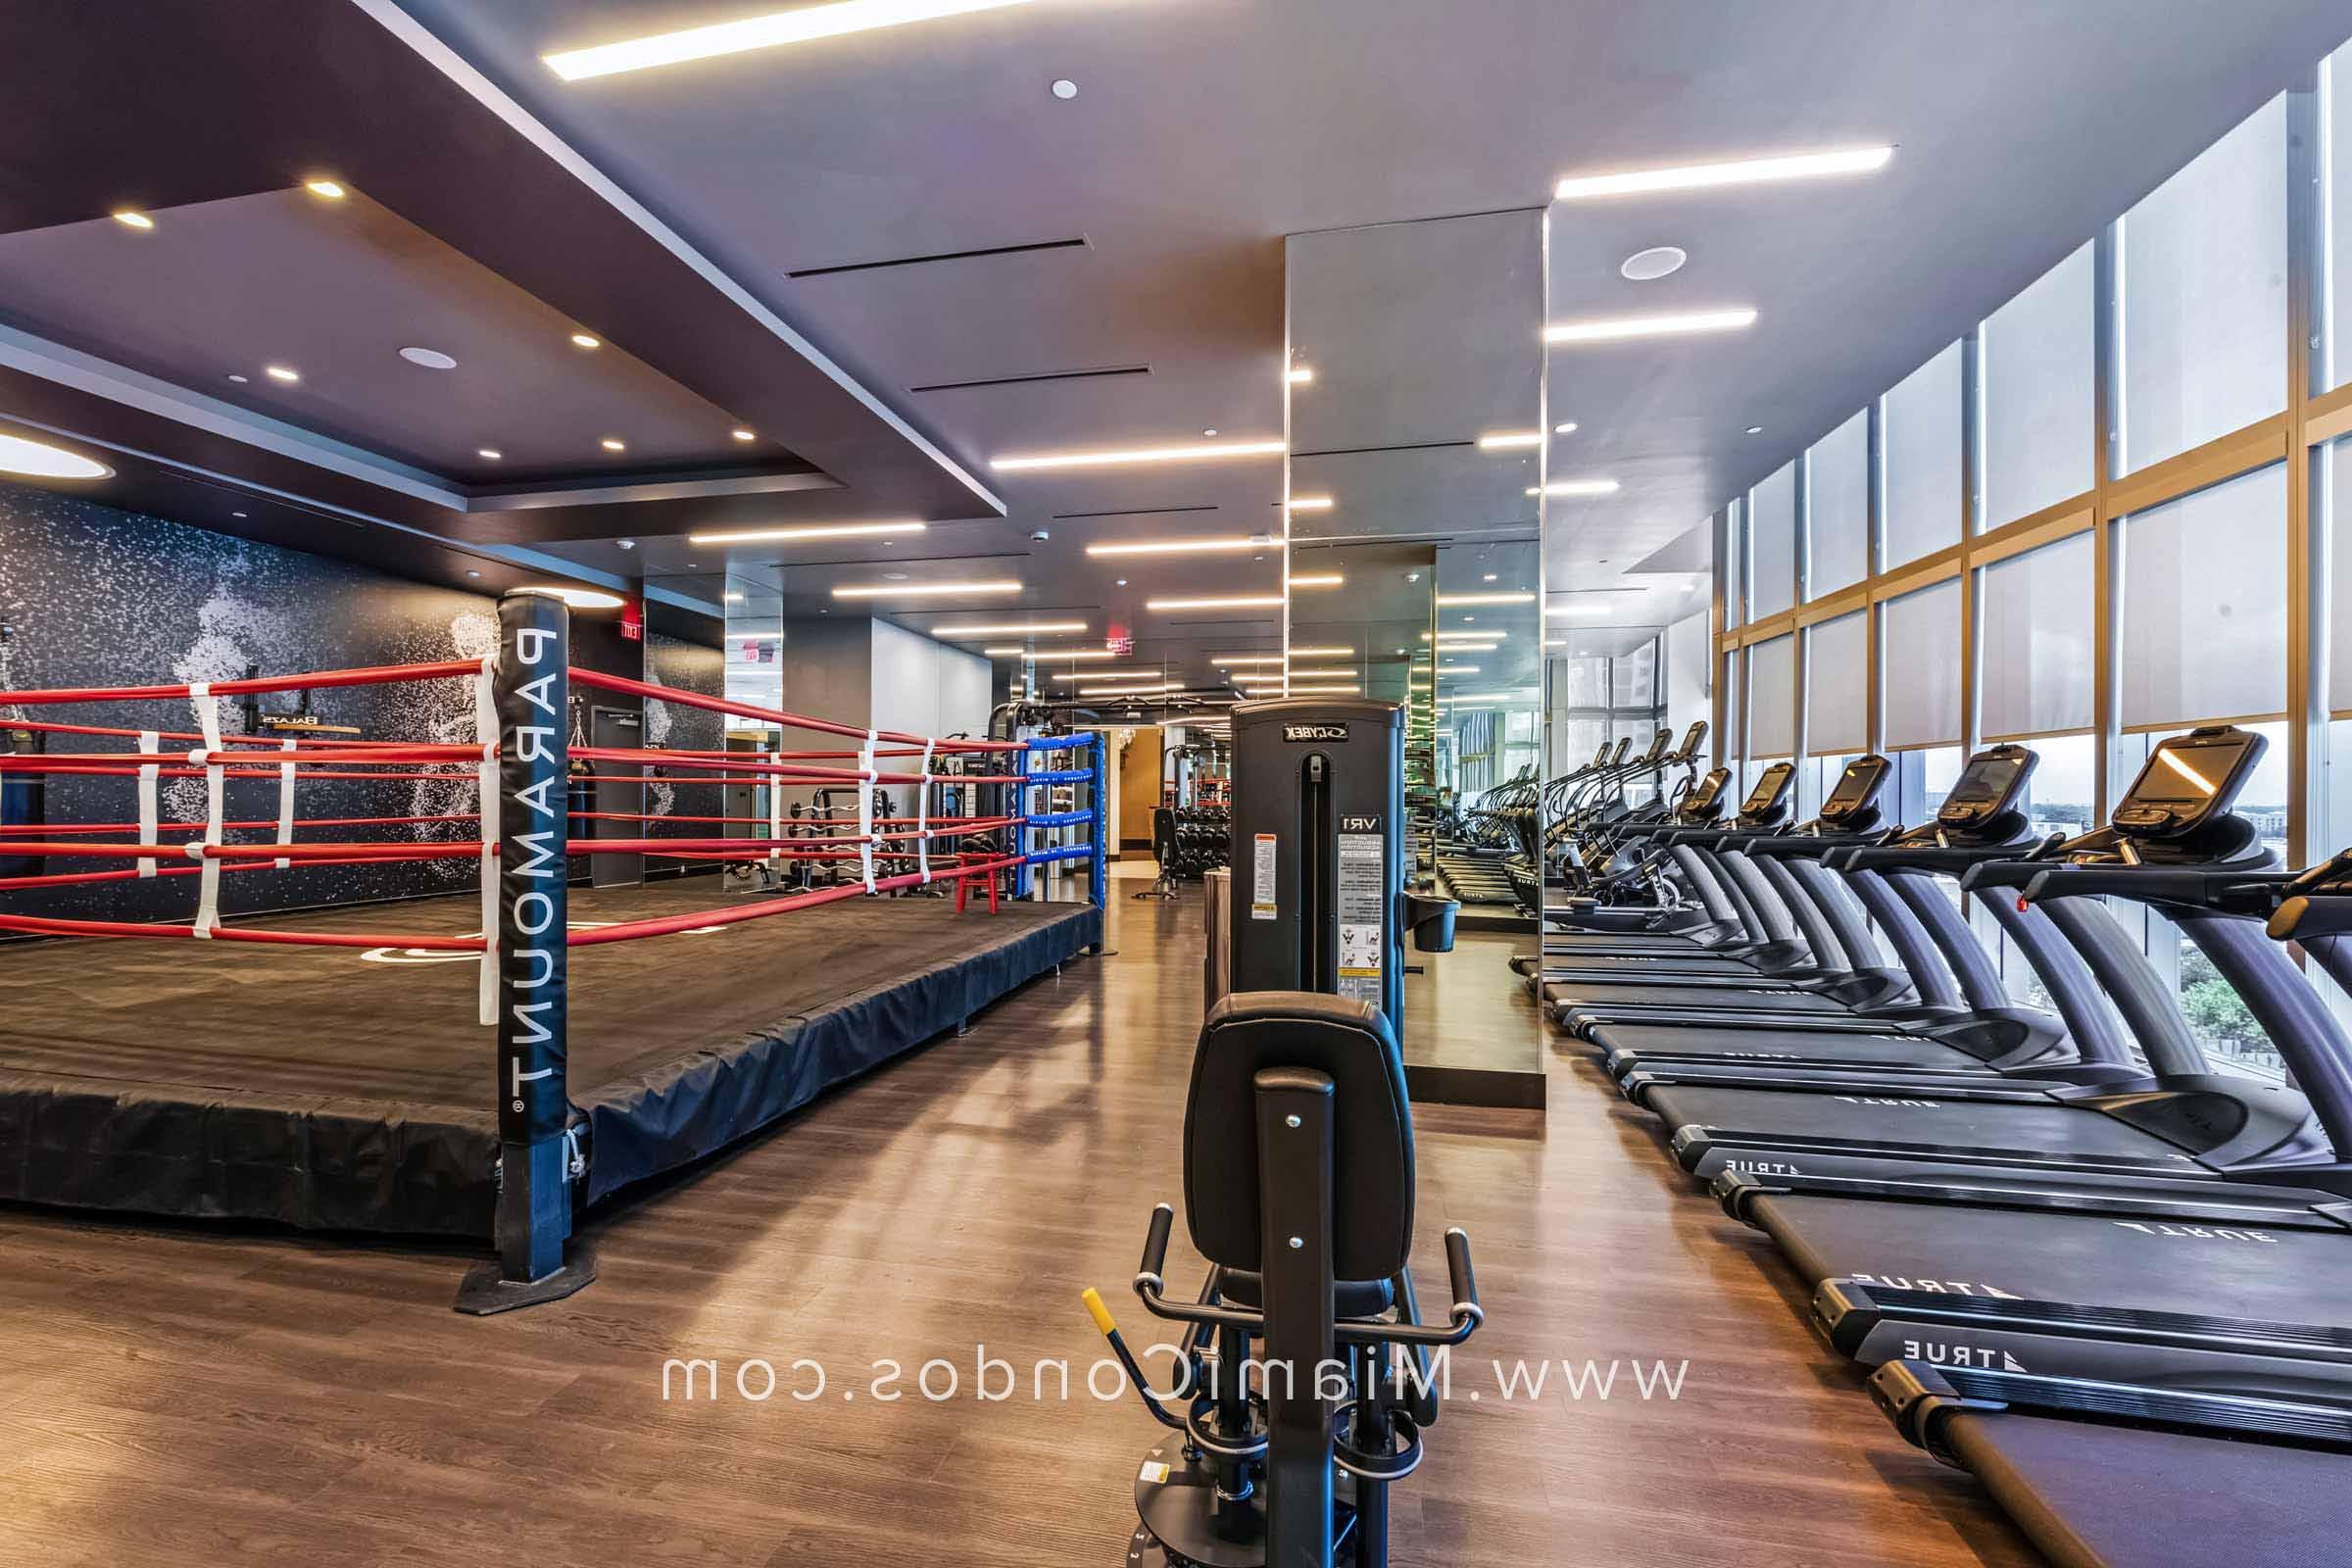 Paramount Miami Worldcenter Fitness Center